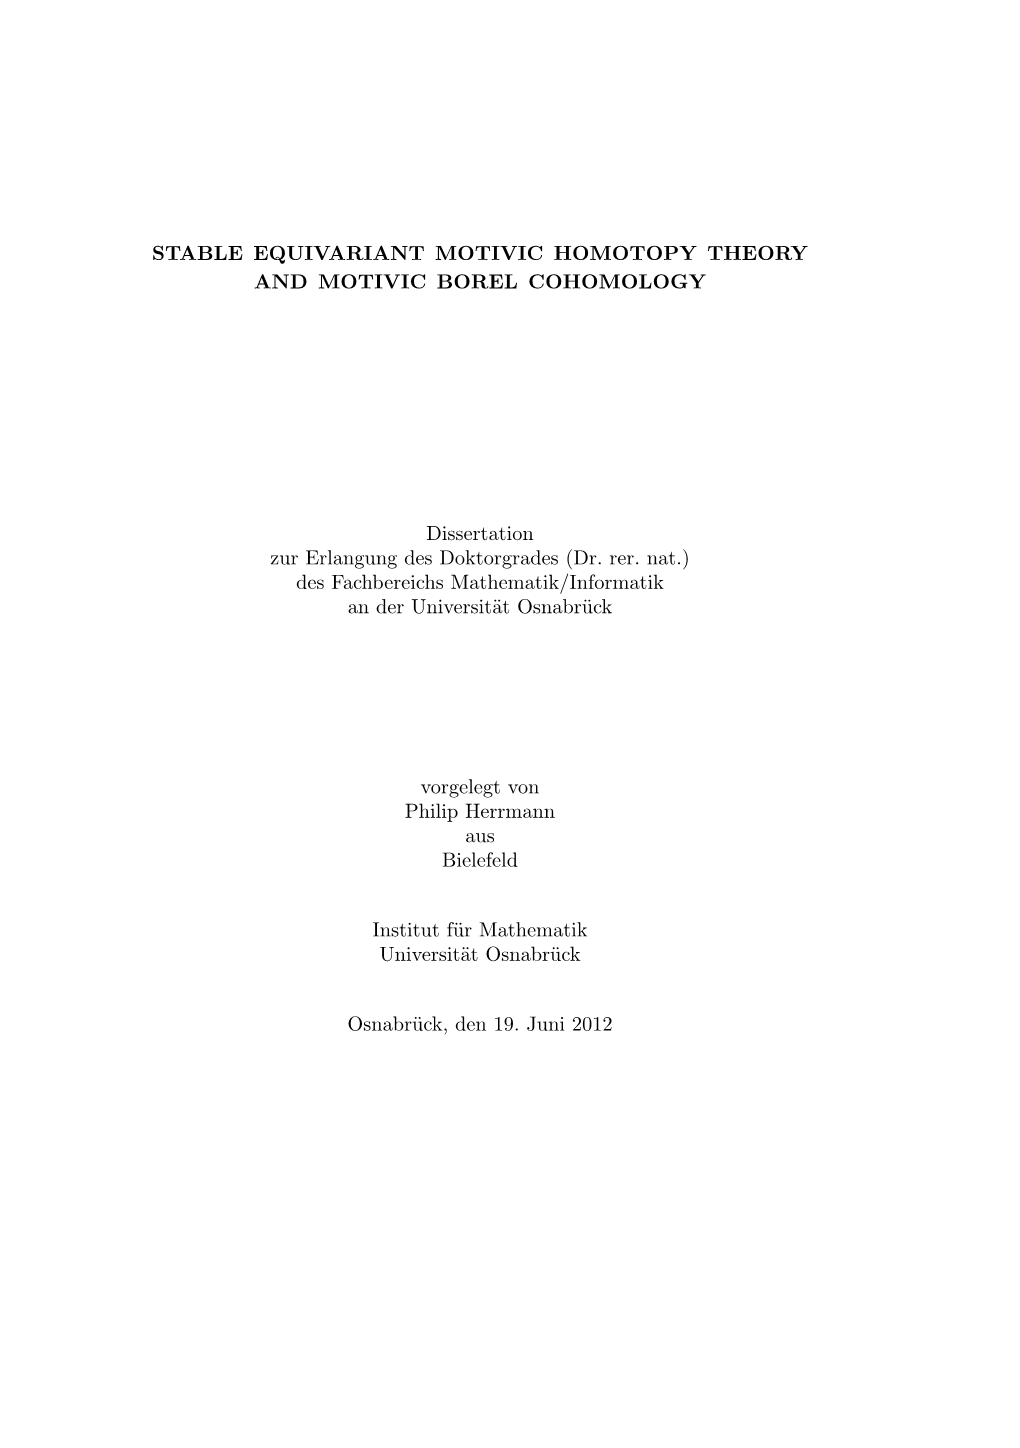 Stable Equivariant Motivic Homotopy Theory and Motivic Borel Cohomology